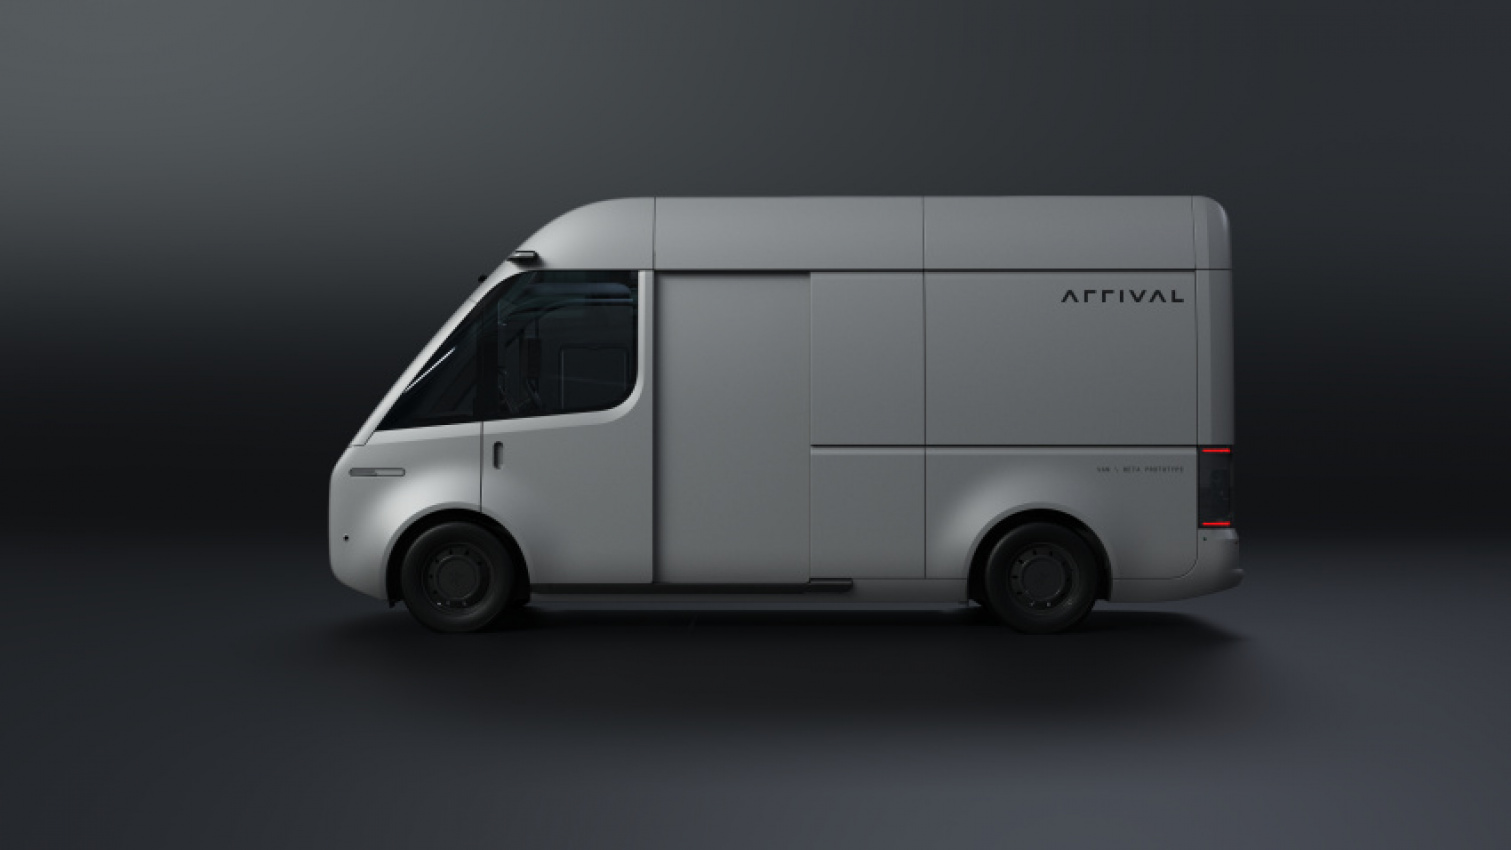 autos, cars, commercial vehicles, arrival, arrival reveals new-look electric van